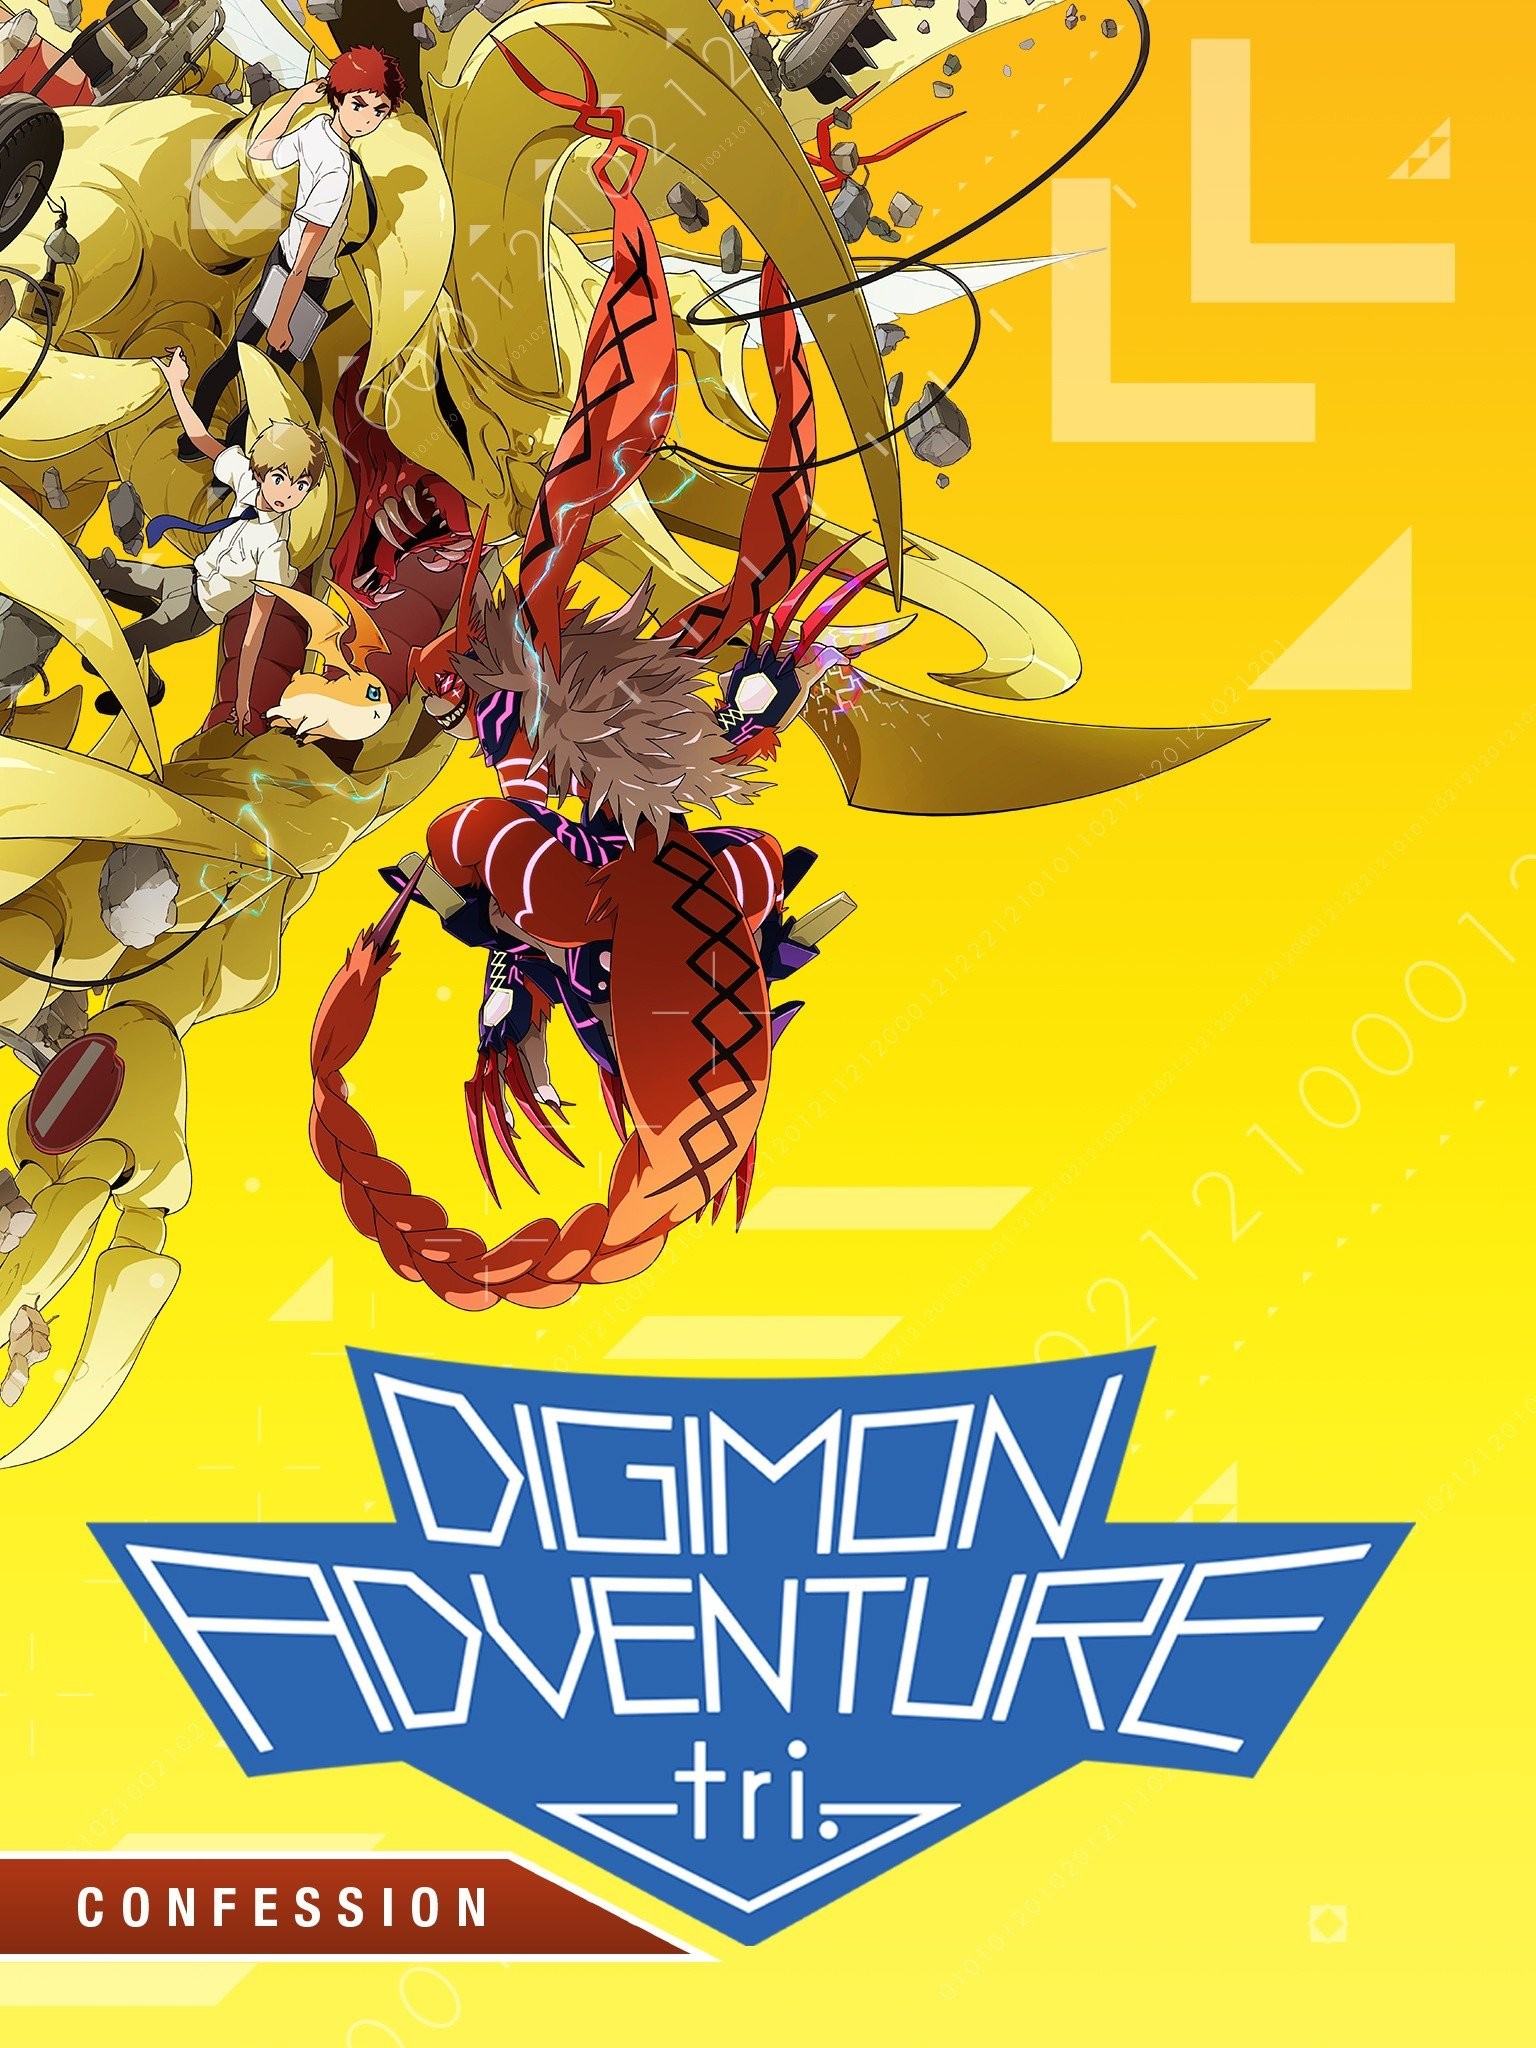 TV Time - Digimon Adventure tri. (TVShow Time)